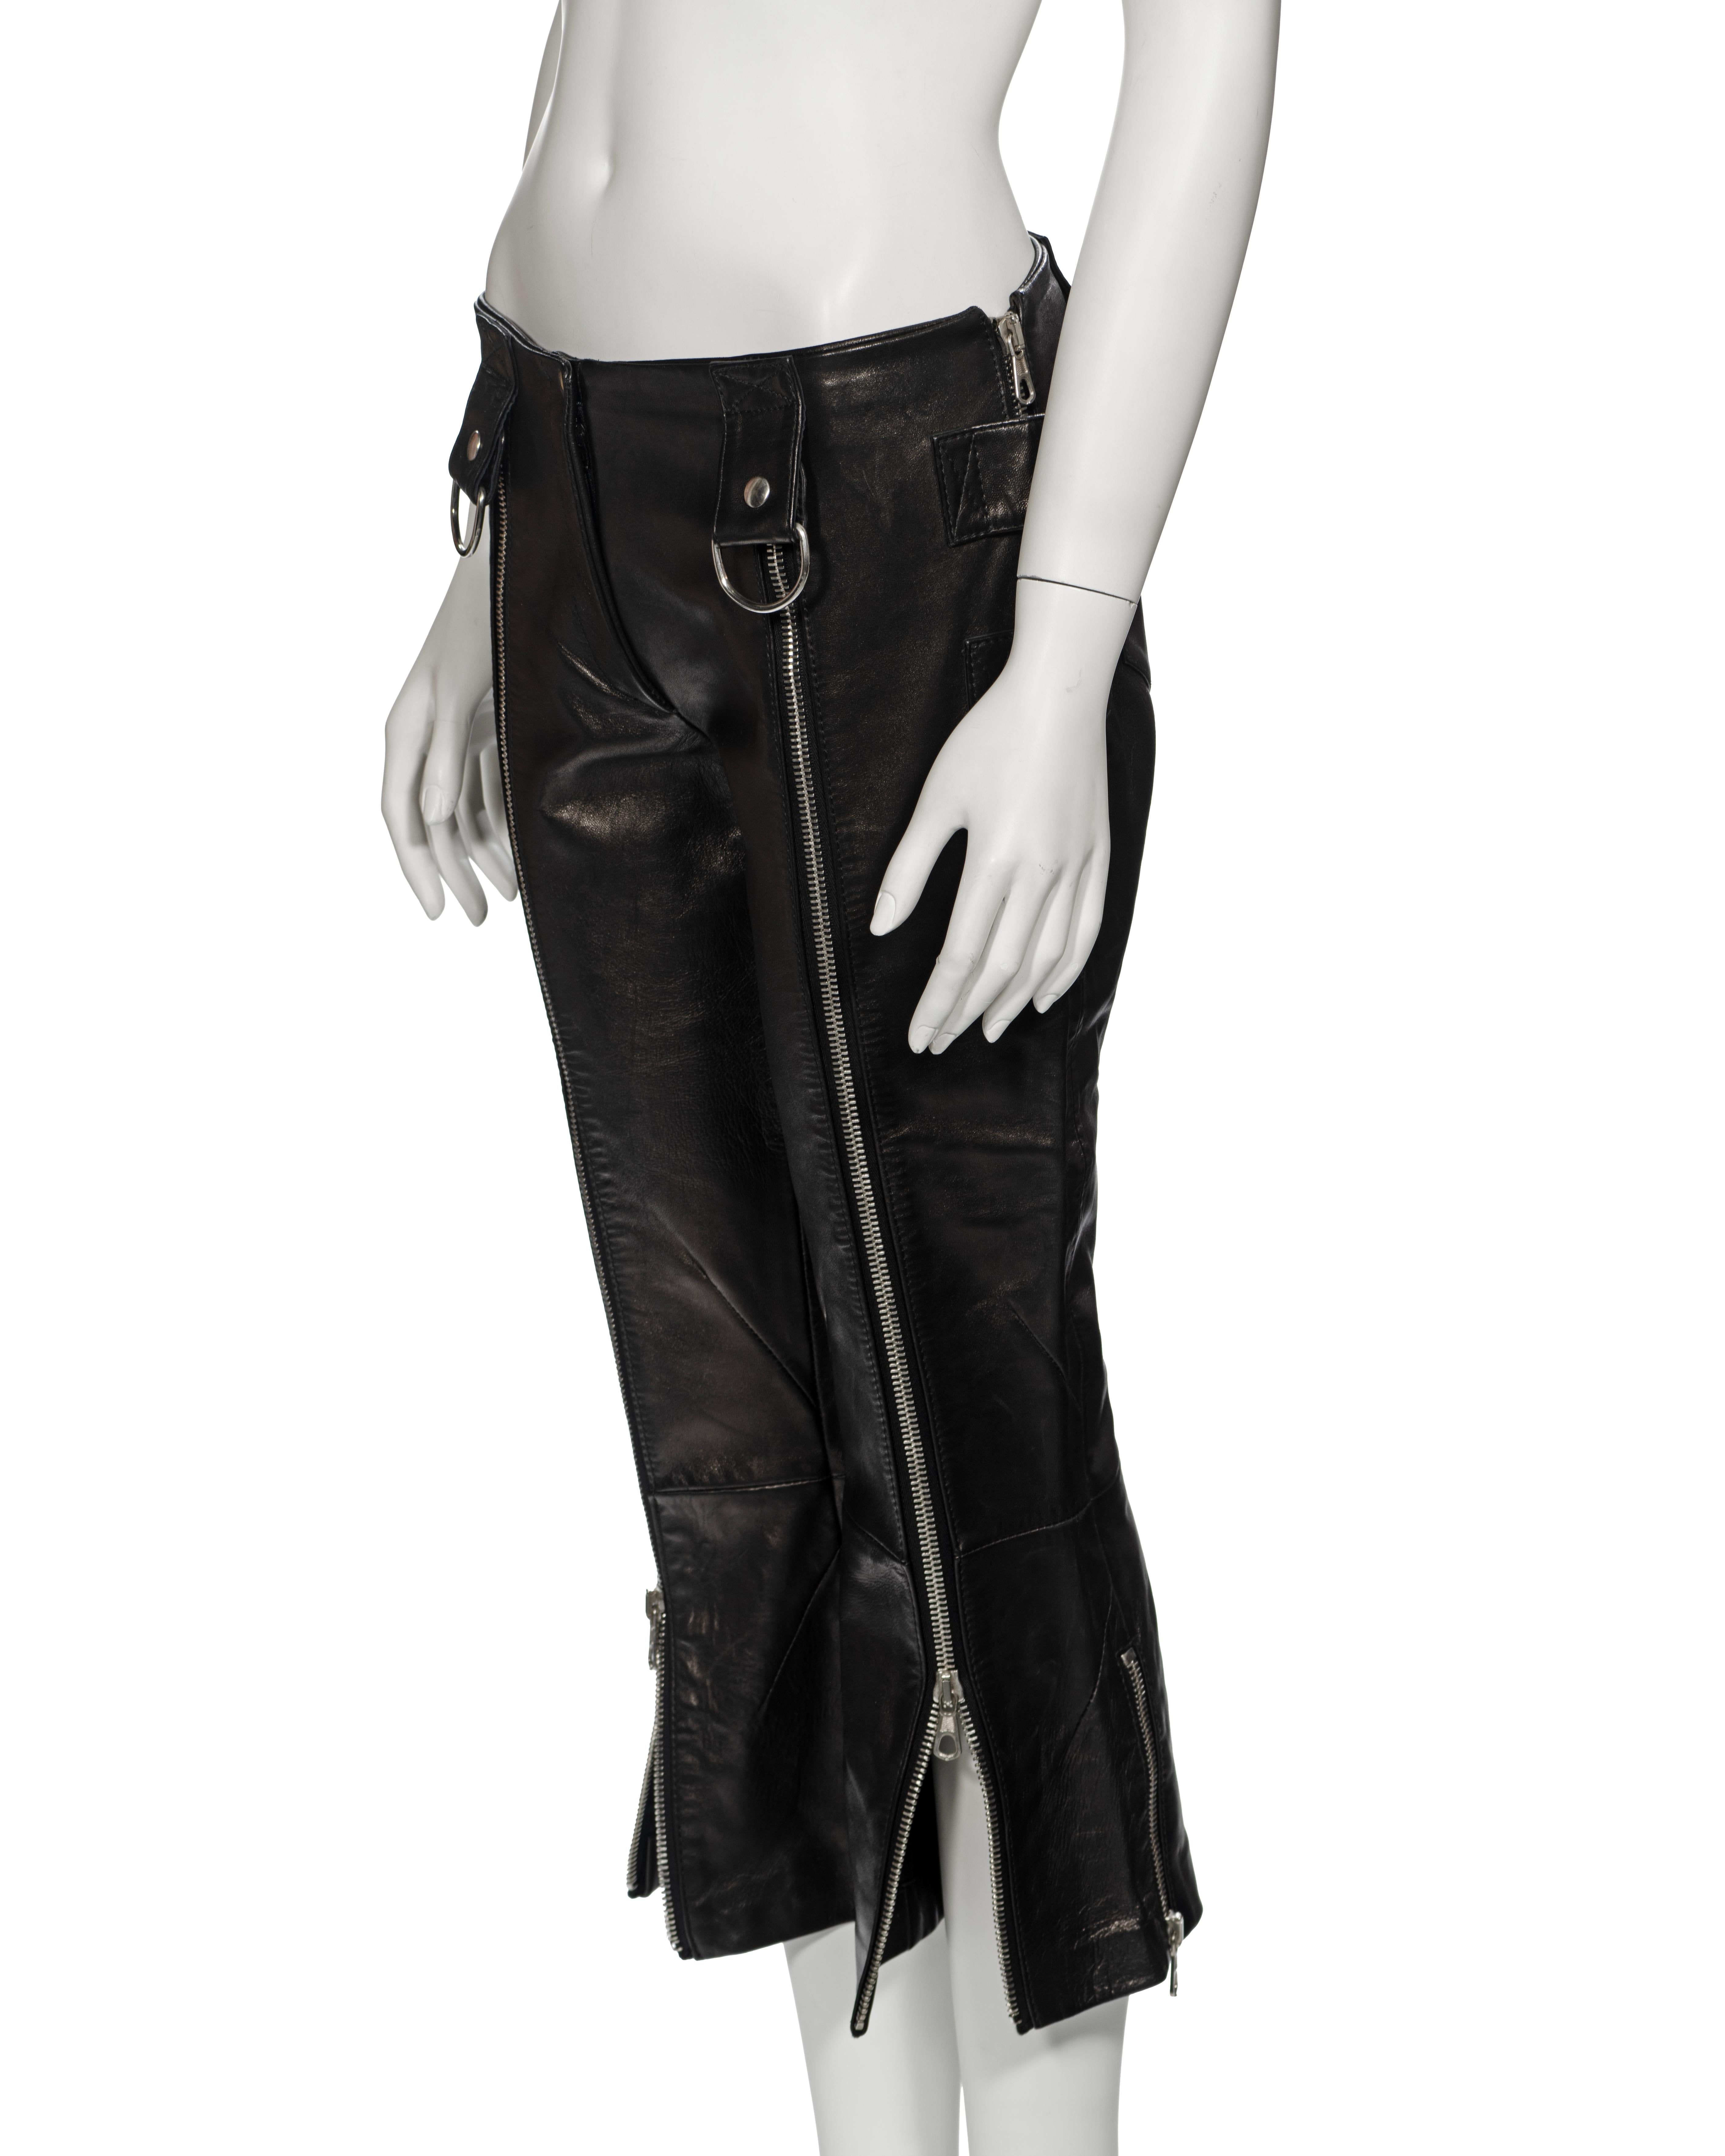 Dolce & Gabbana Black Leather Capri Pants, ss 2000 For Sale 10